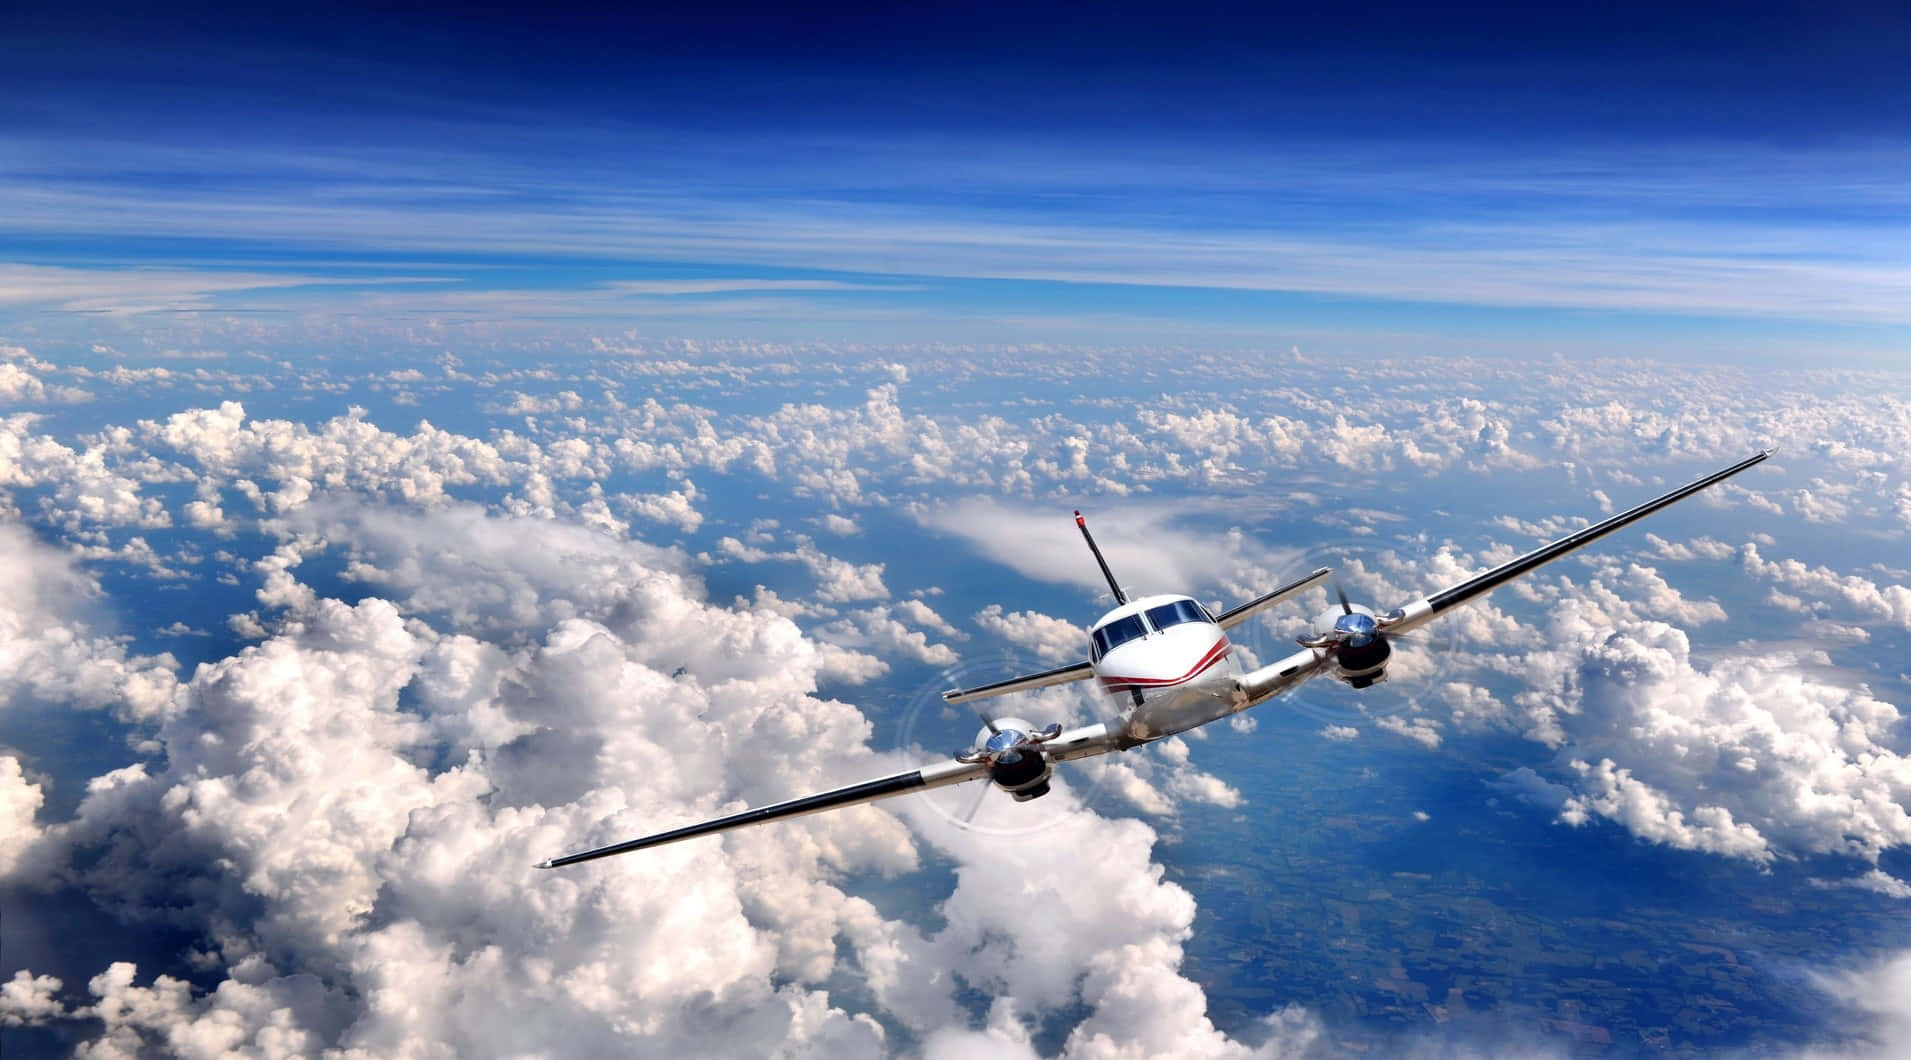 Jet Engine Power Makes Flight Possible